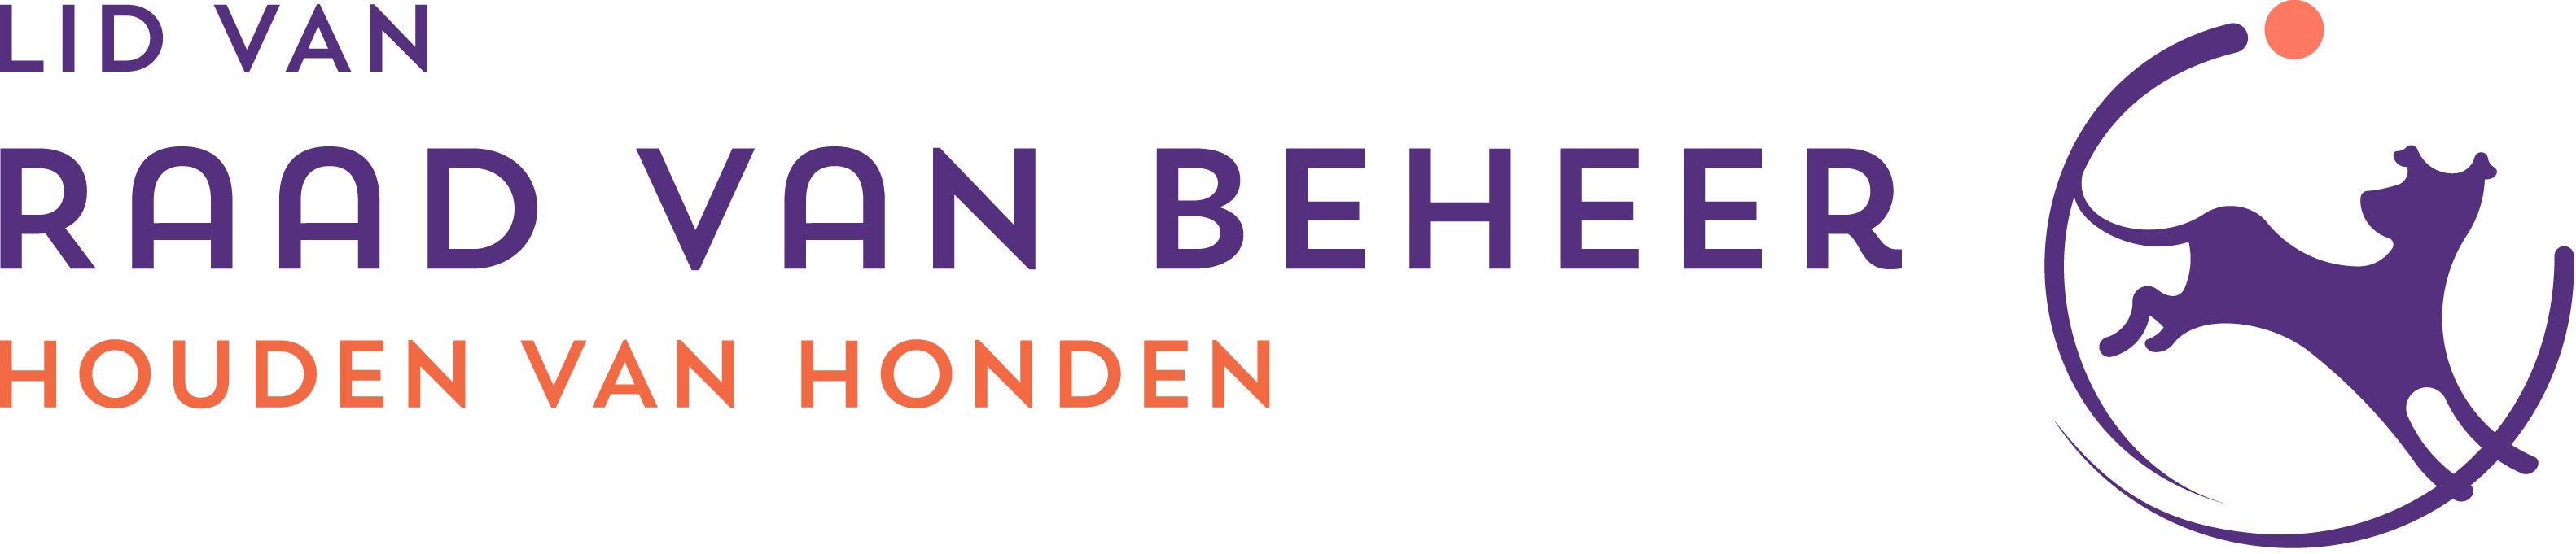 Logo_Lid-van-RvB_Horizontaal_CMYK_Basis